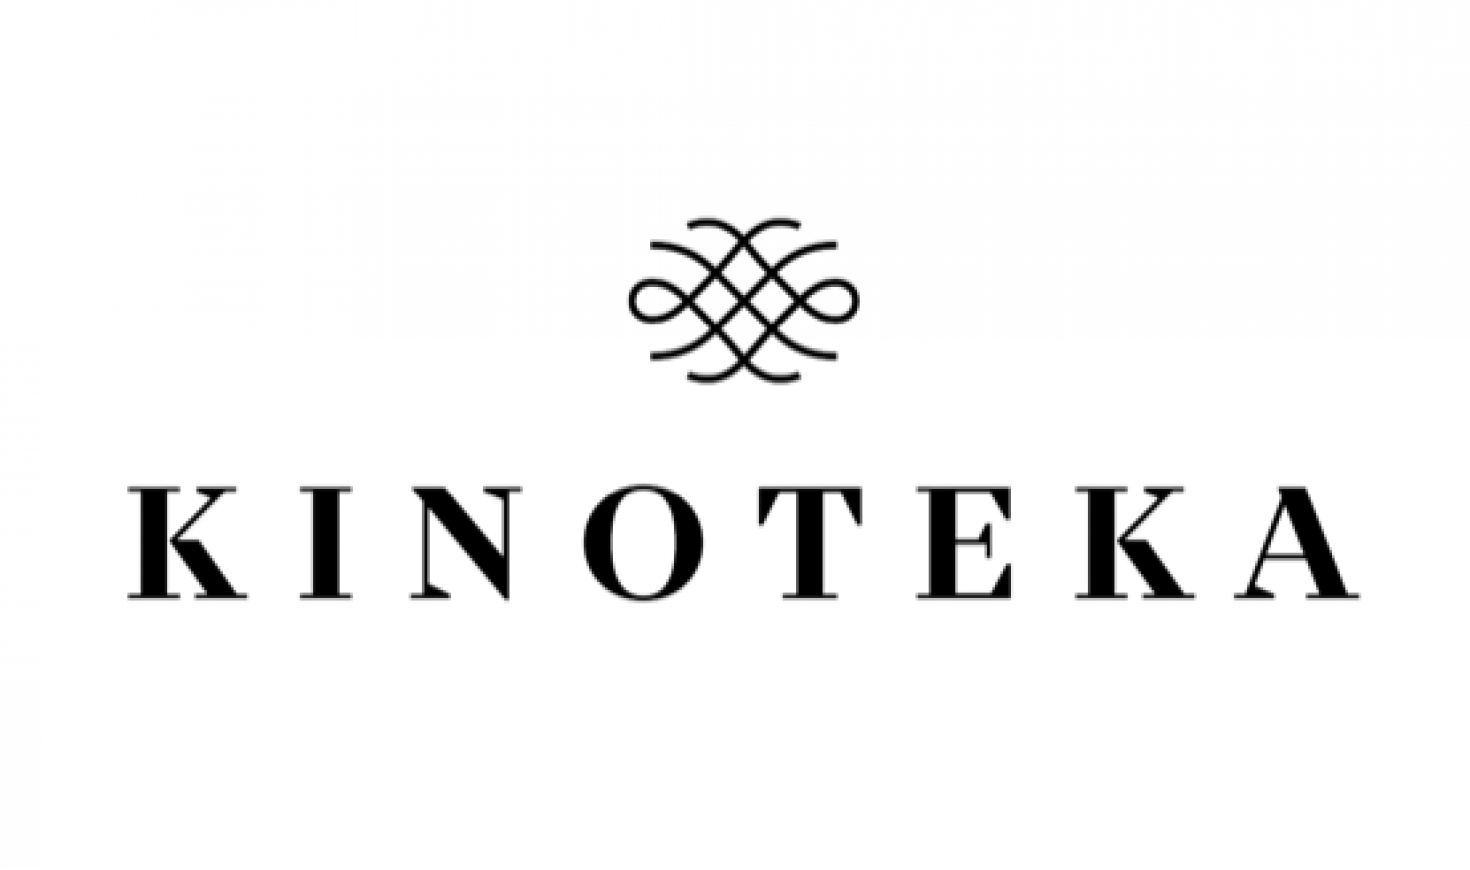 Kinoteka logo